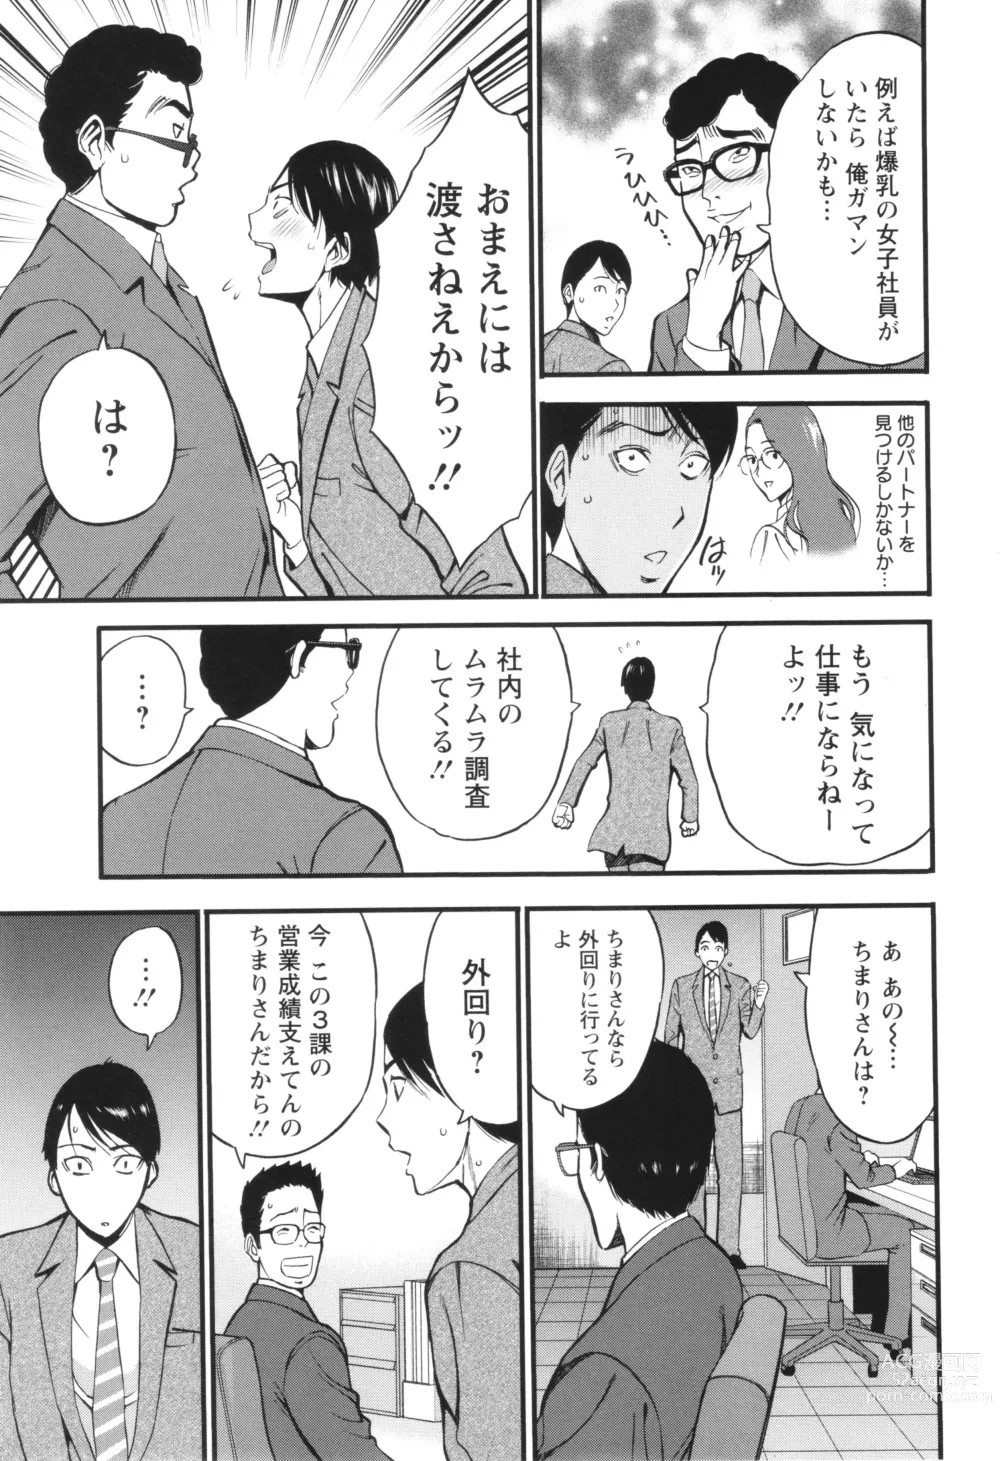 Page 35 of manga Compla Yuruyuru Chimari-san  - Chimaris compliance awareness is very lax.